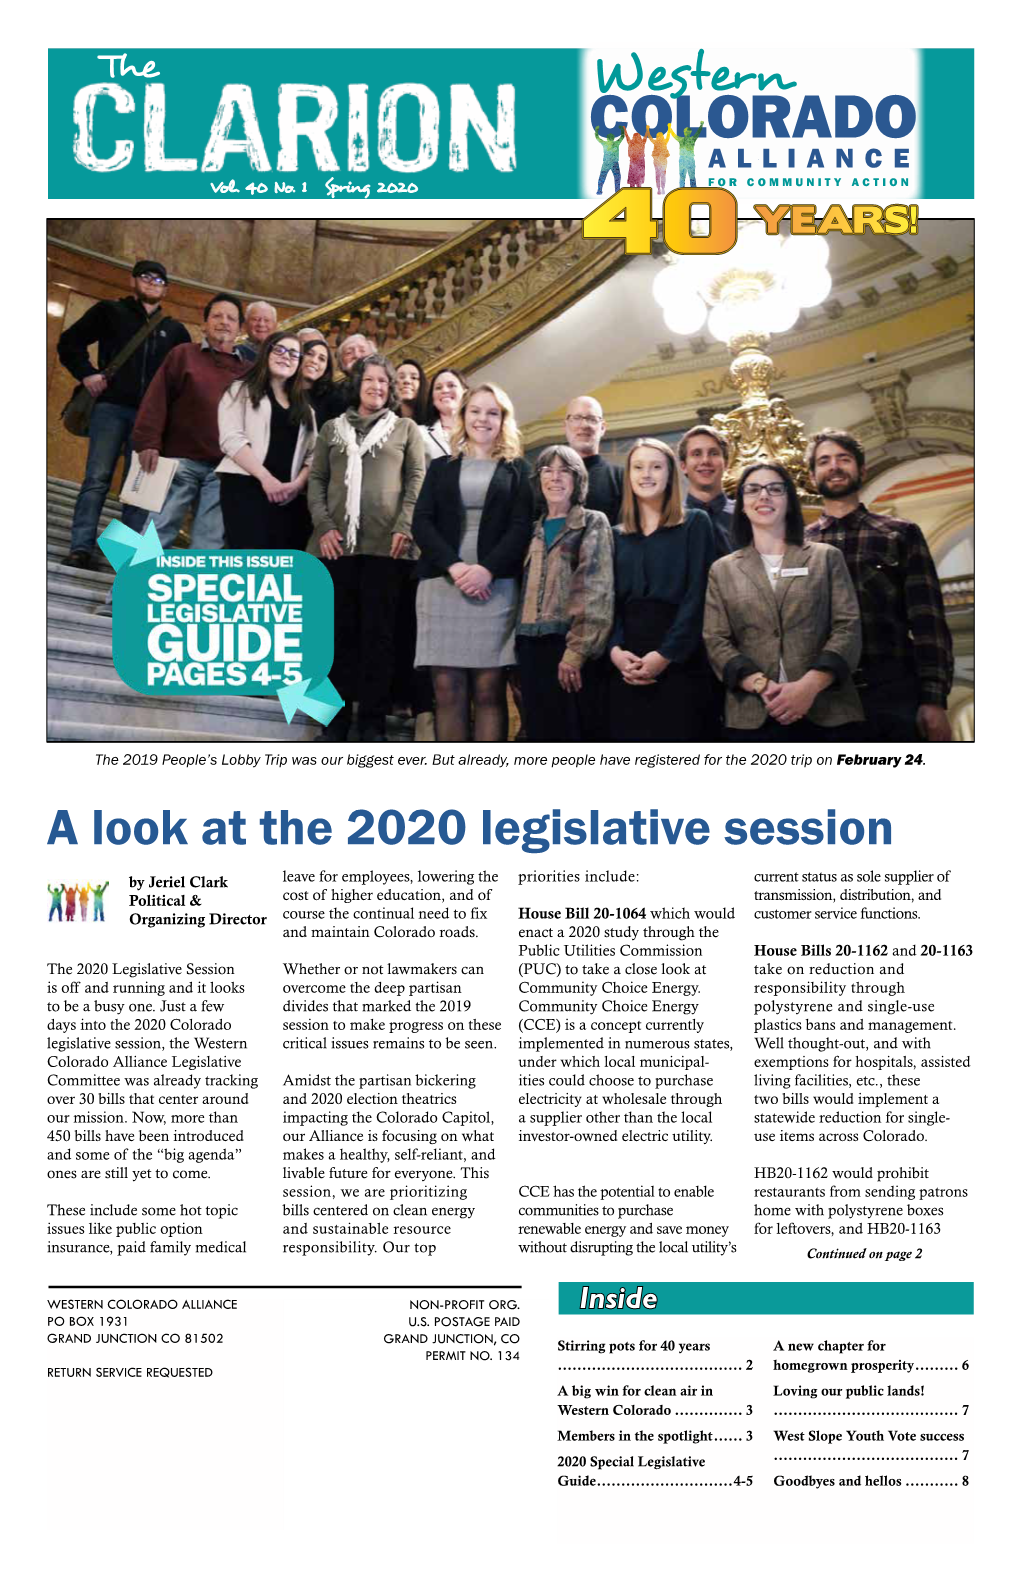 A Look at the 2020 Legislative Session